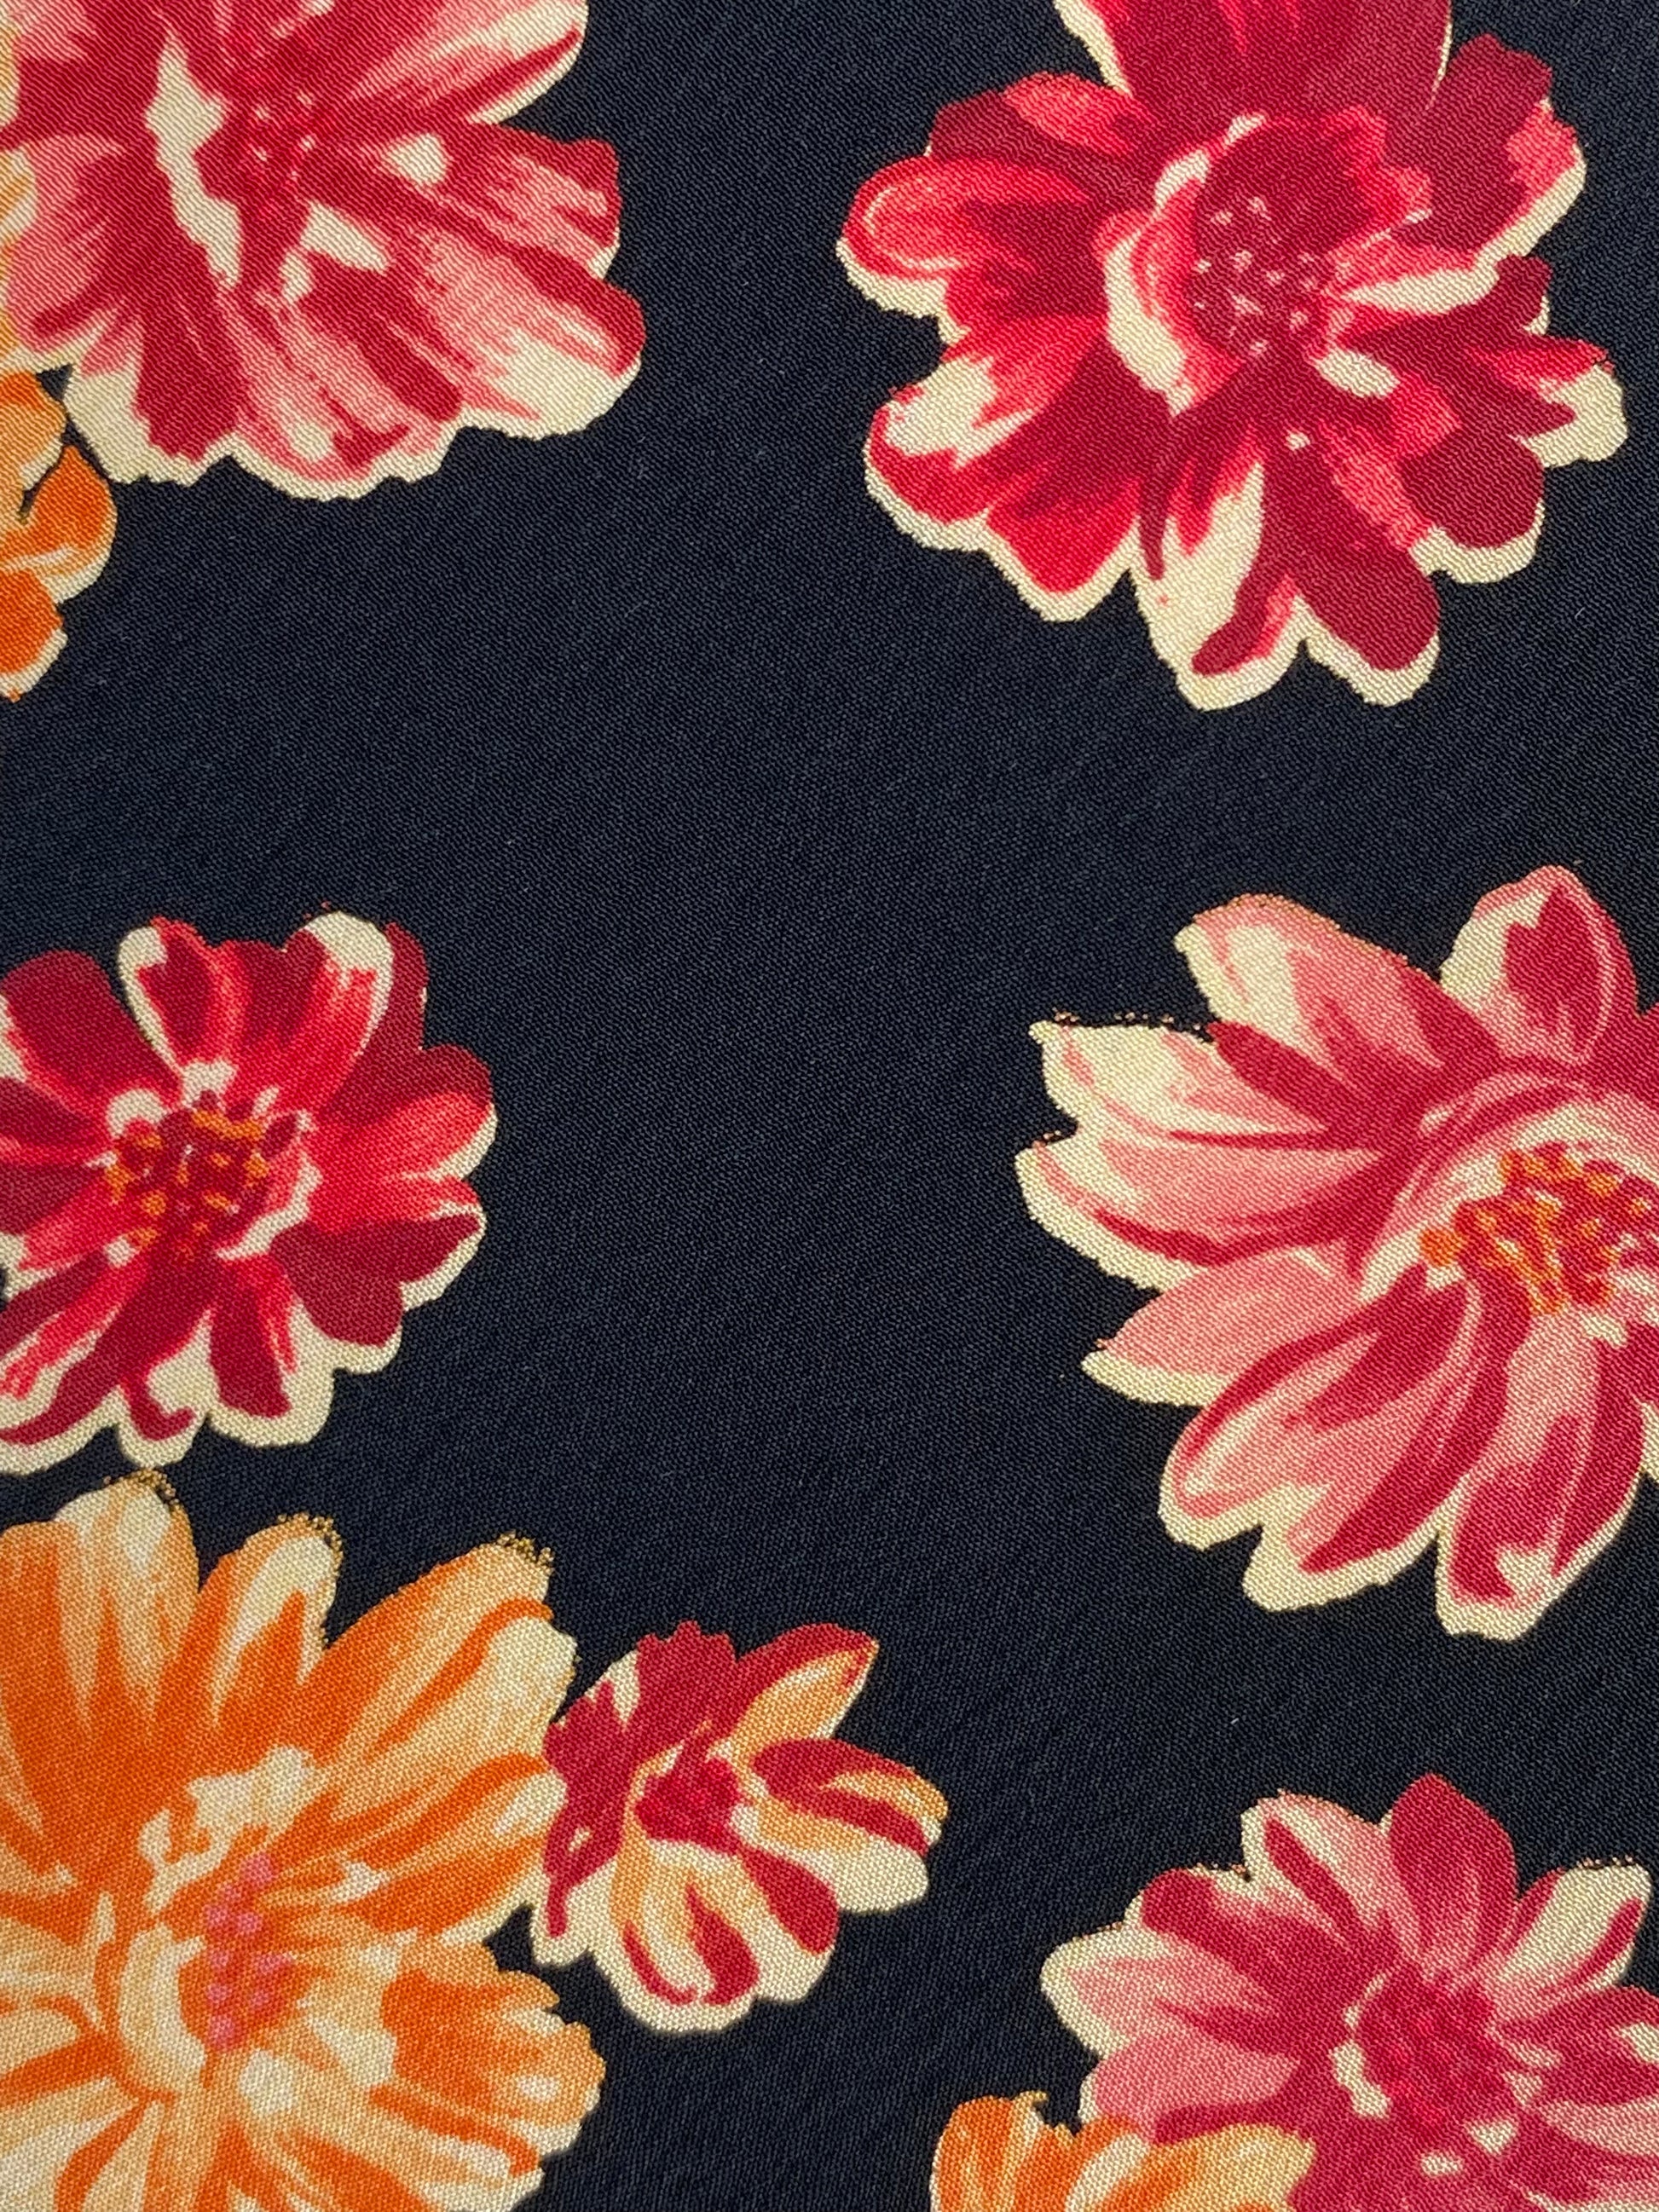 Close-up detail of: 90s Deadstock Silk Necktie, Men's Vintage Black/ Orange/ Pink Floral Pattern Tie, NOS